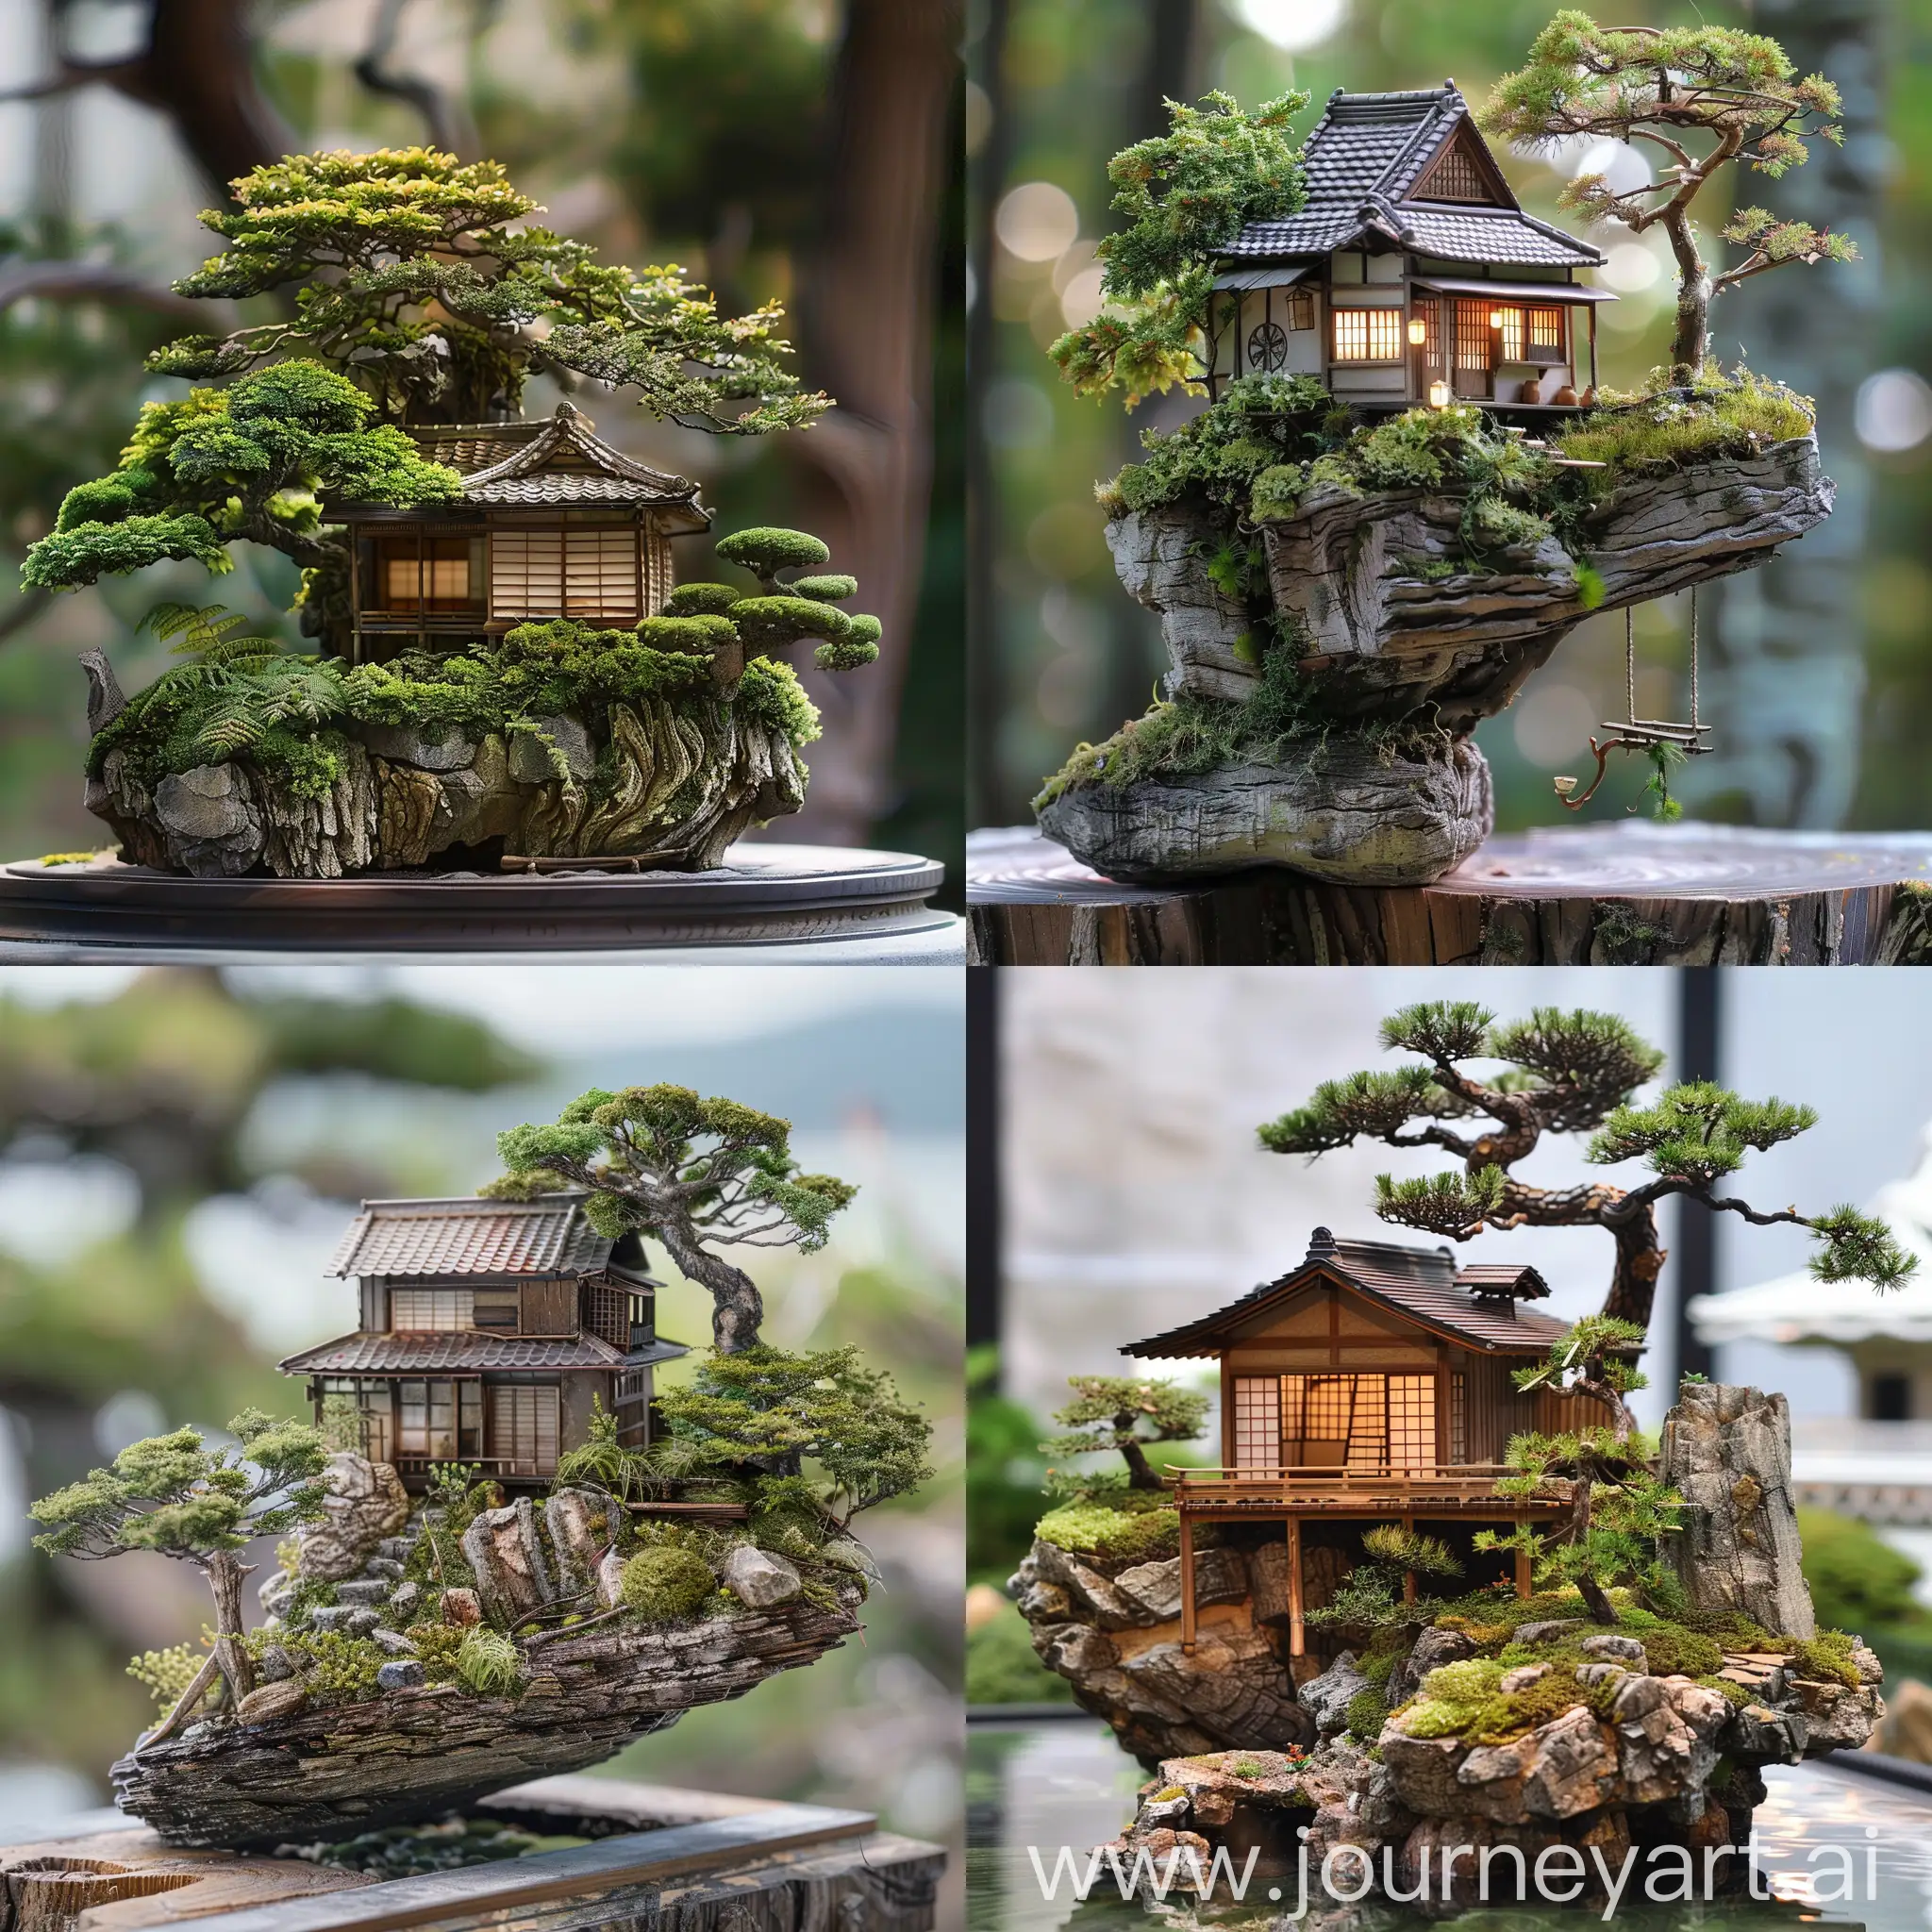 A tiny Japanese house in a bonsai world 